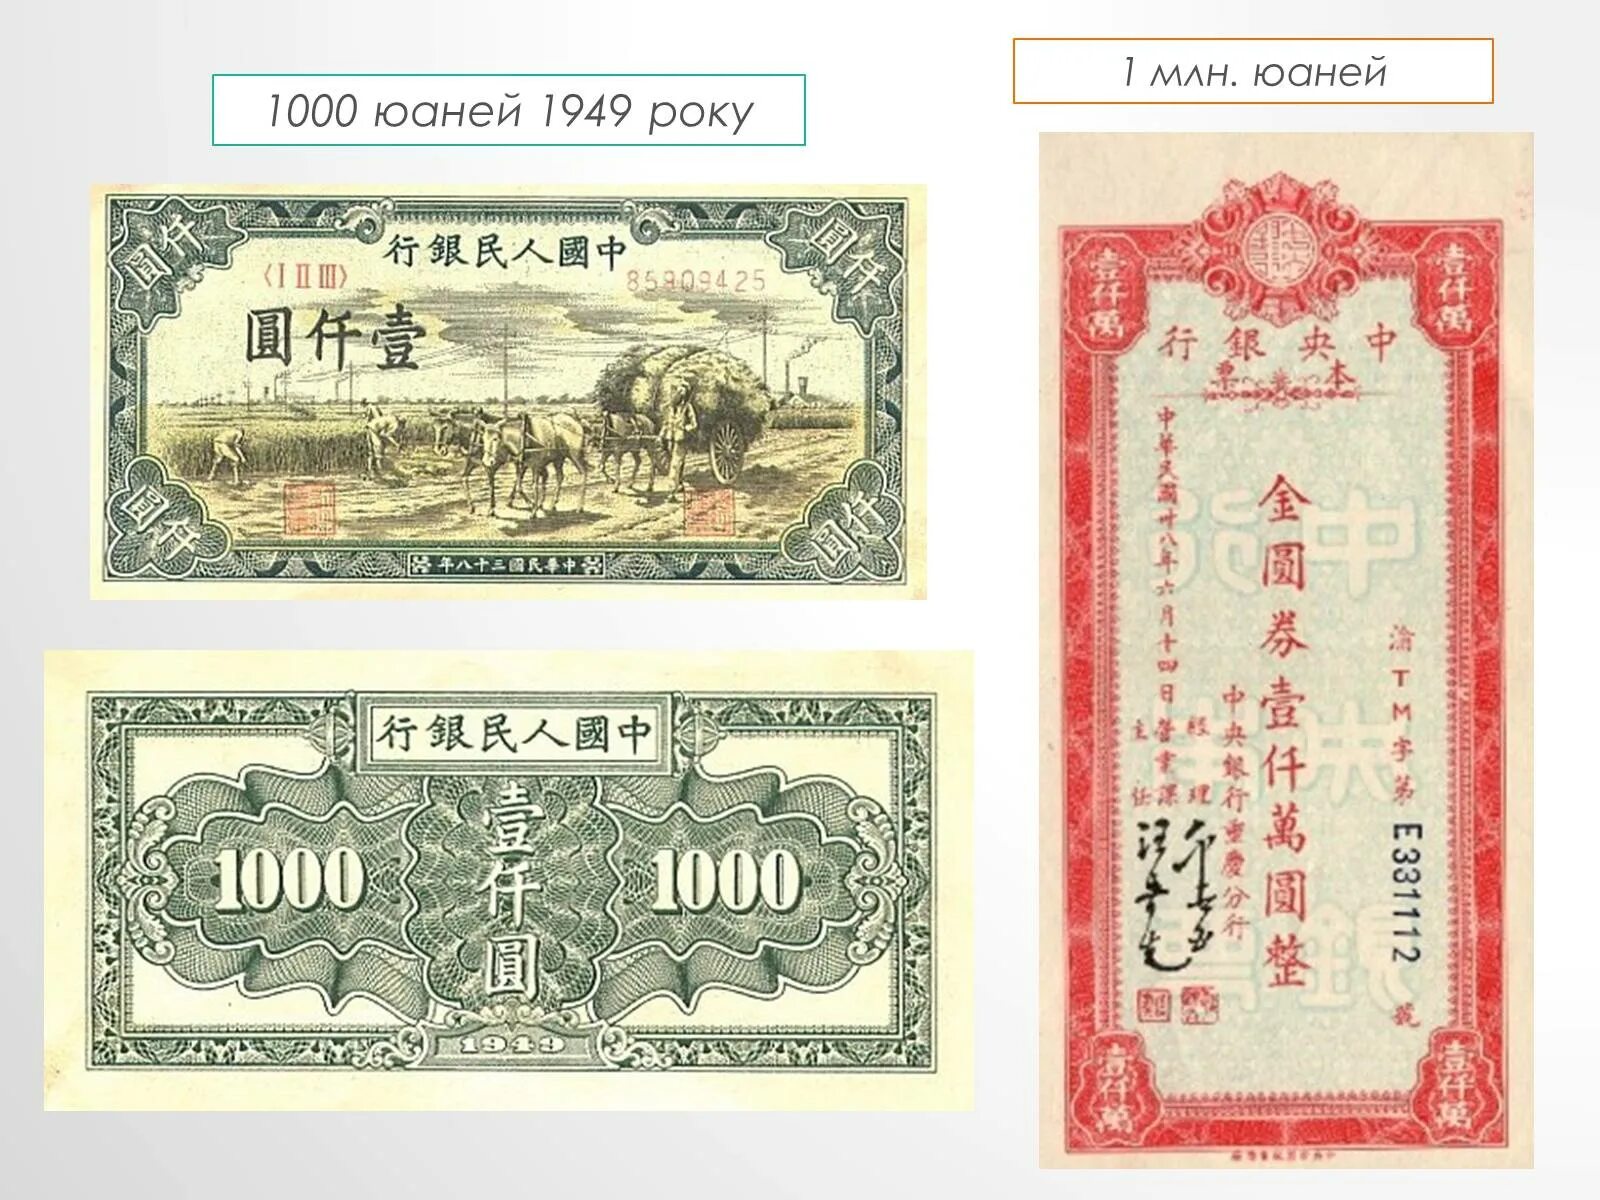 1949 Юаней. 1000 Юаней. Миллион юаней. 1000 Юаней купюра.